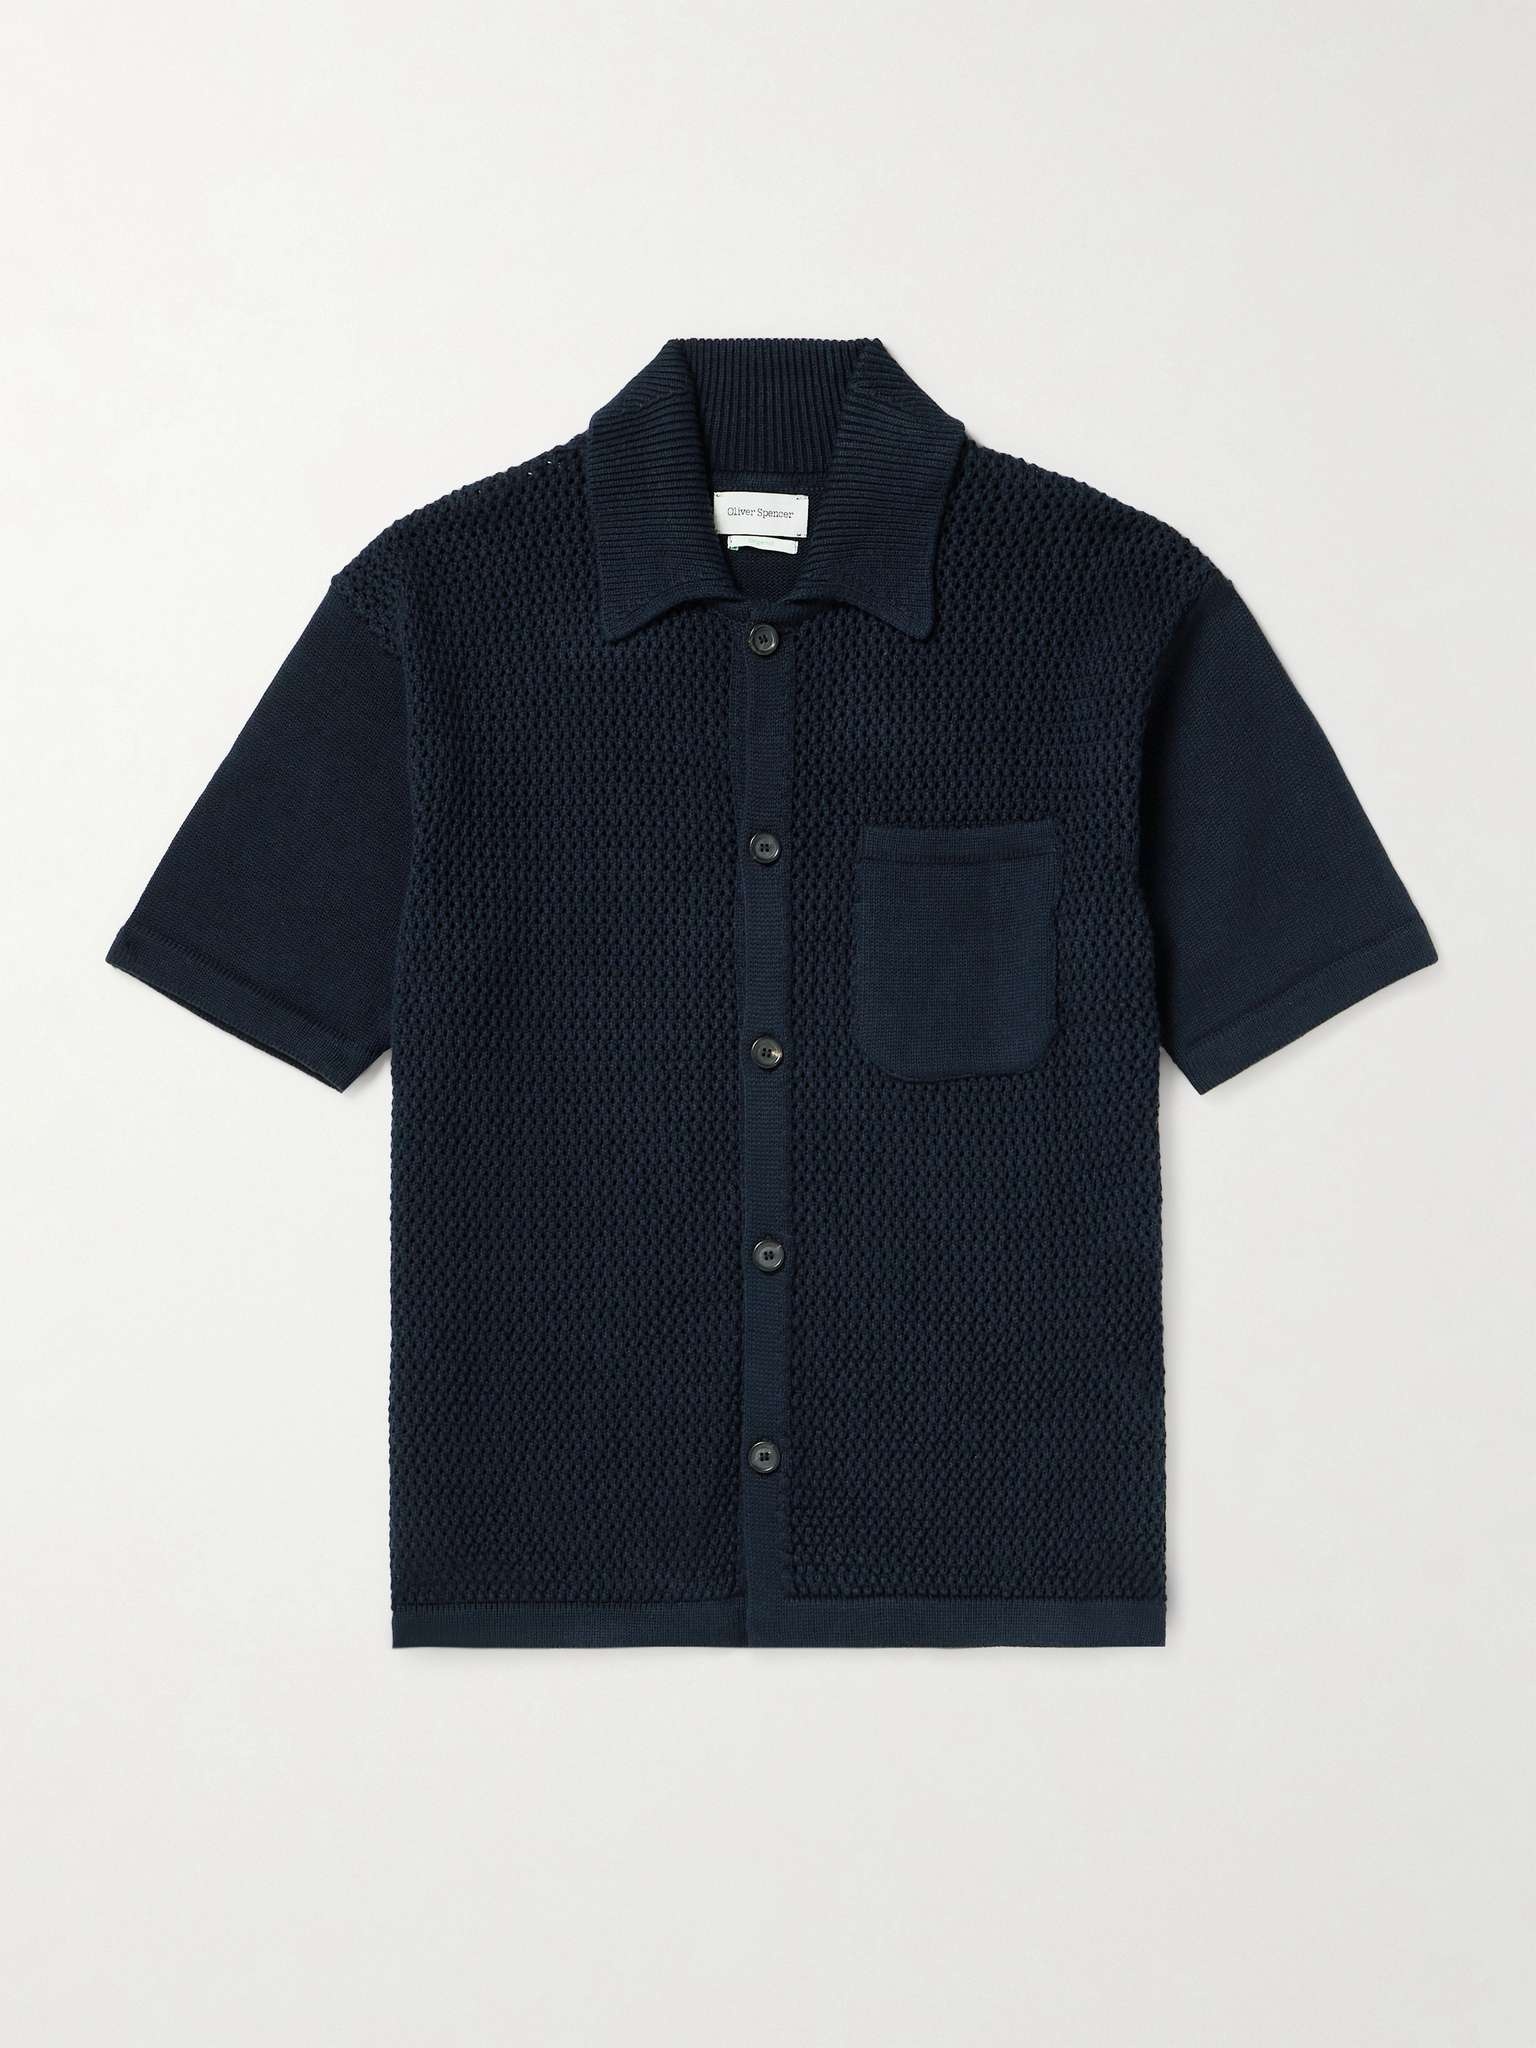 Mawes Open-Knit Organic Cotton Shirt - 1